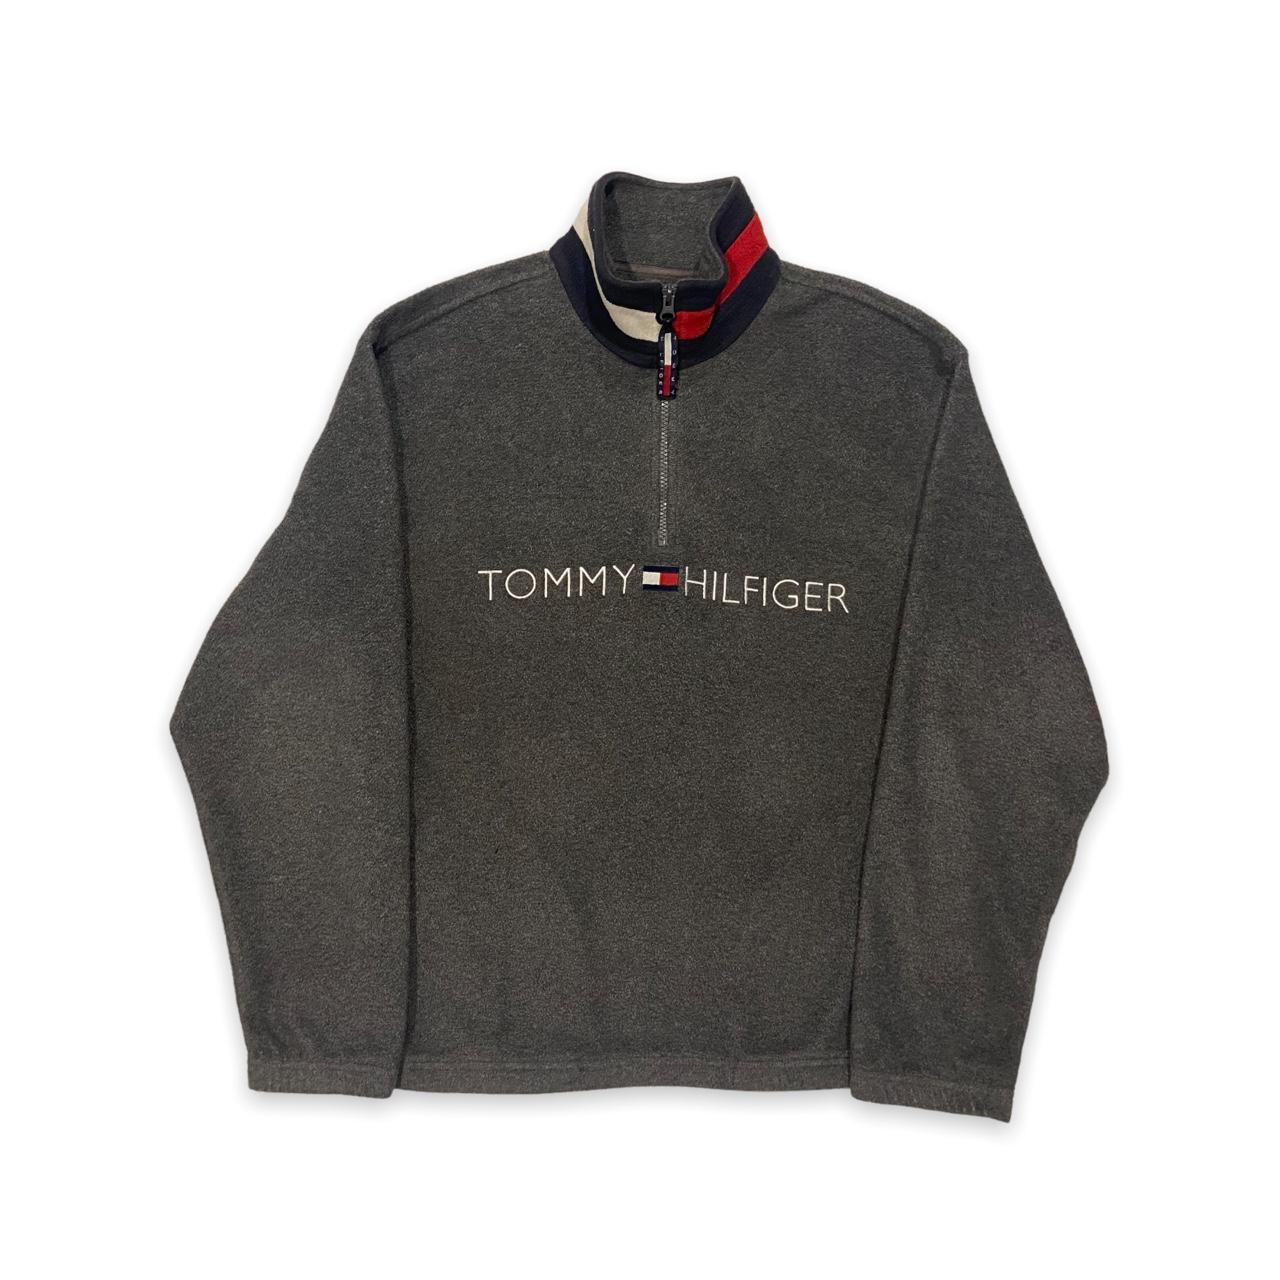 Tommy Hilfiger 1/4 Zip Fleece with Embroidered Logo... - Depop